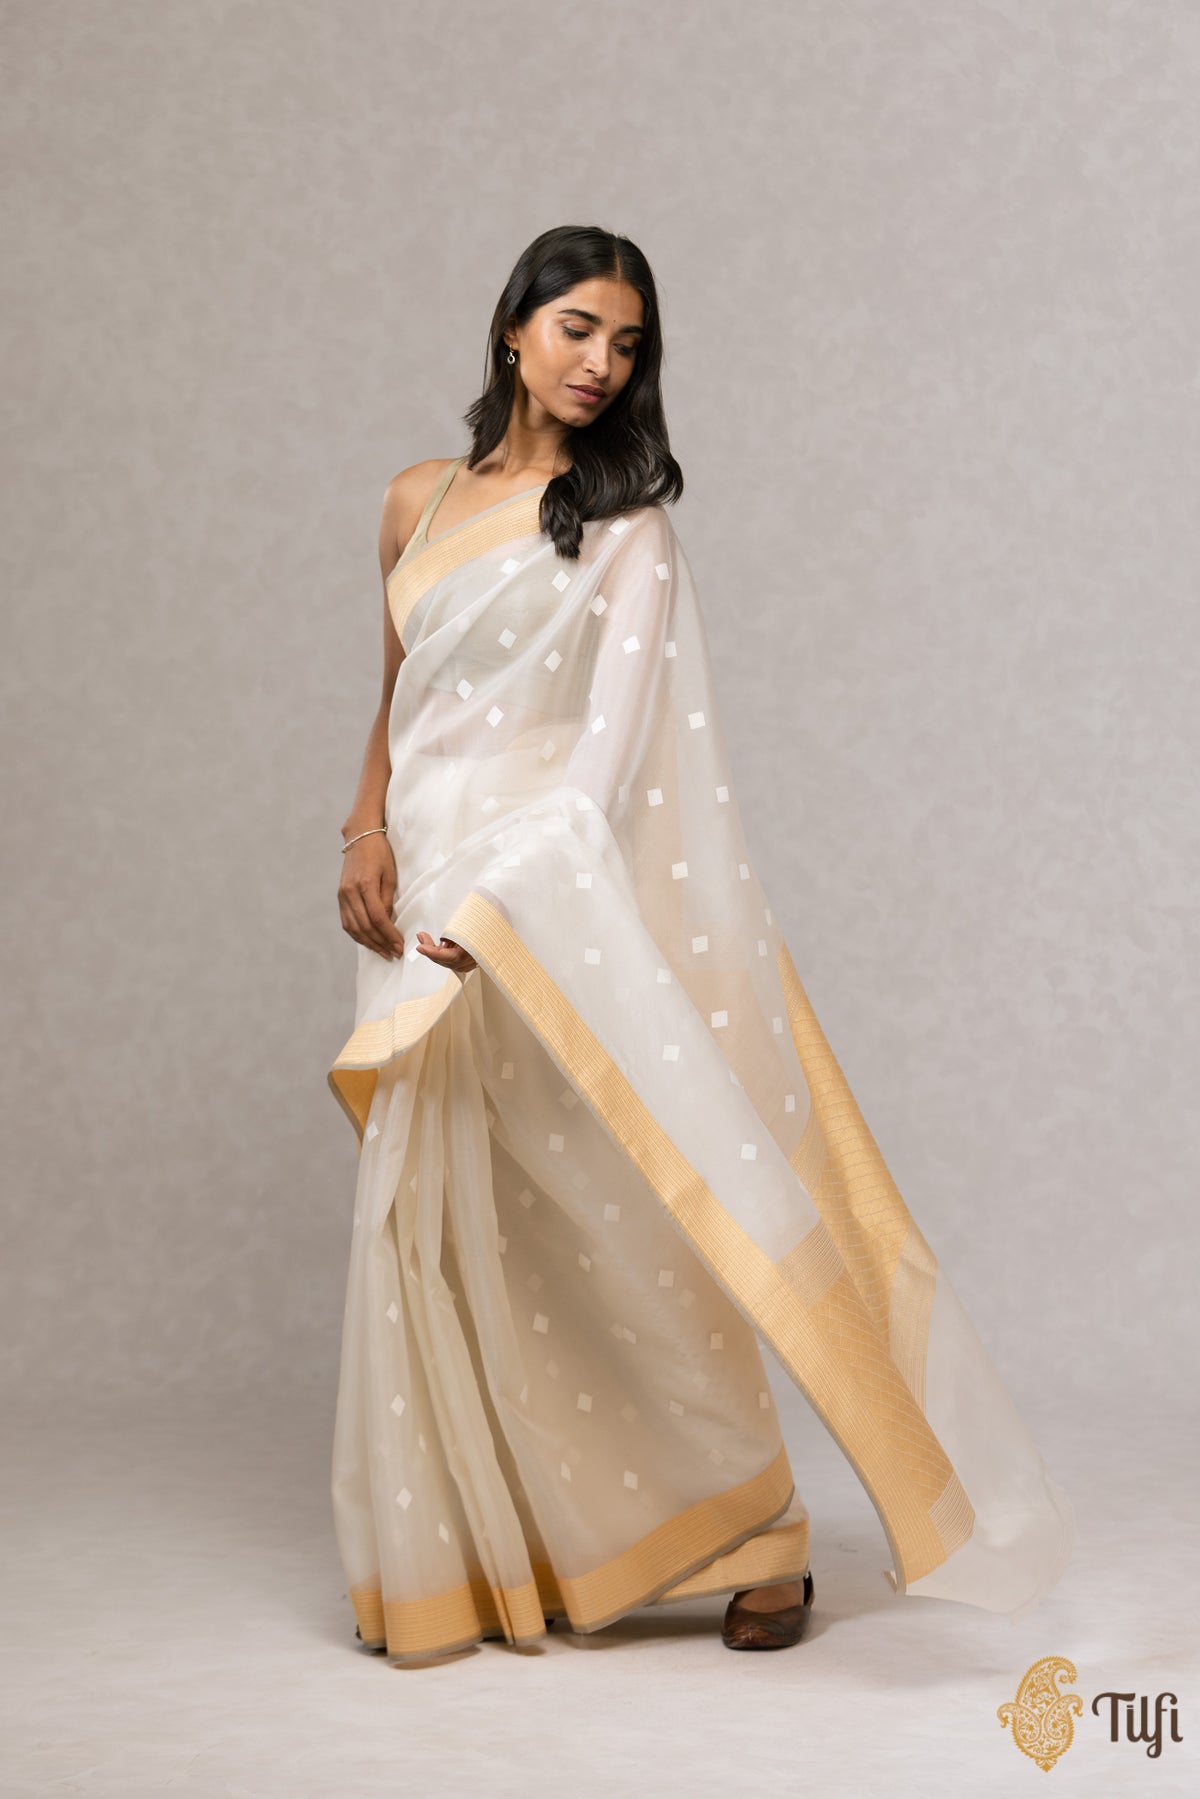 Off-White Pure Kora Silk Banarasi Handloom Saree